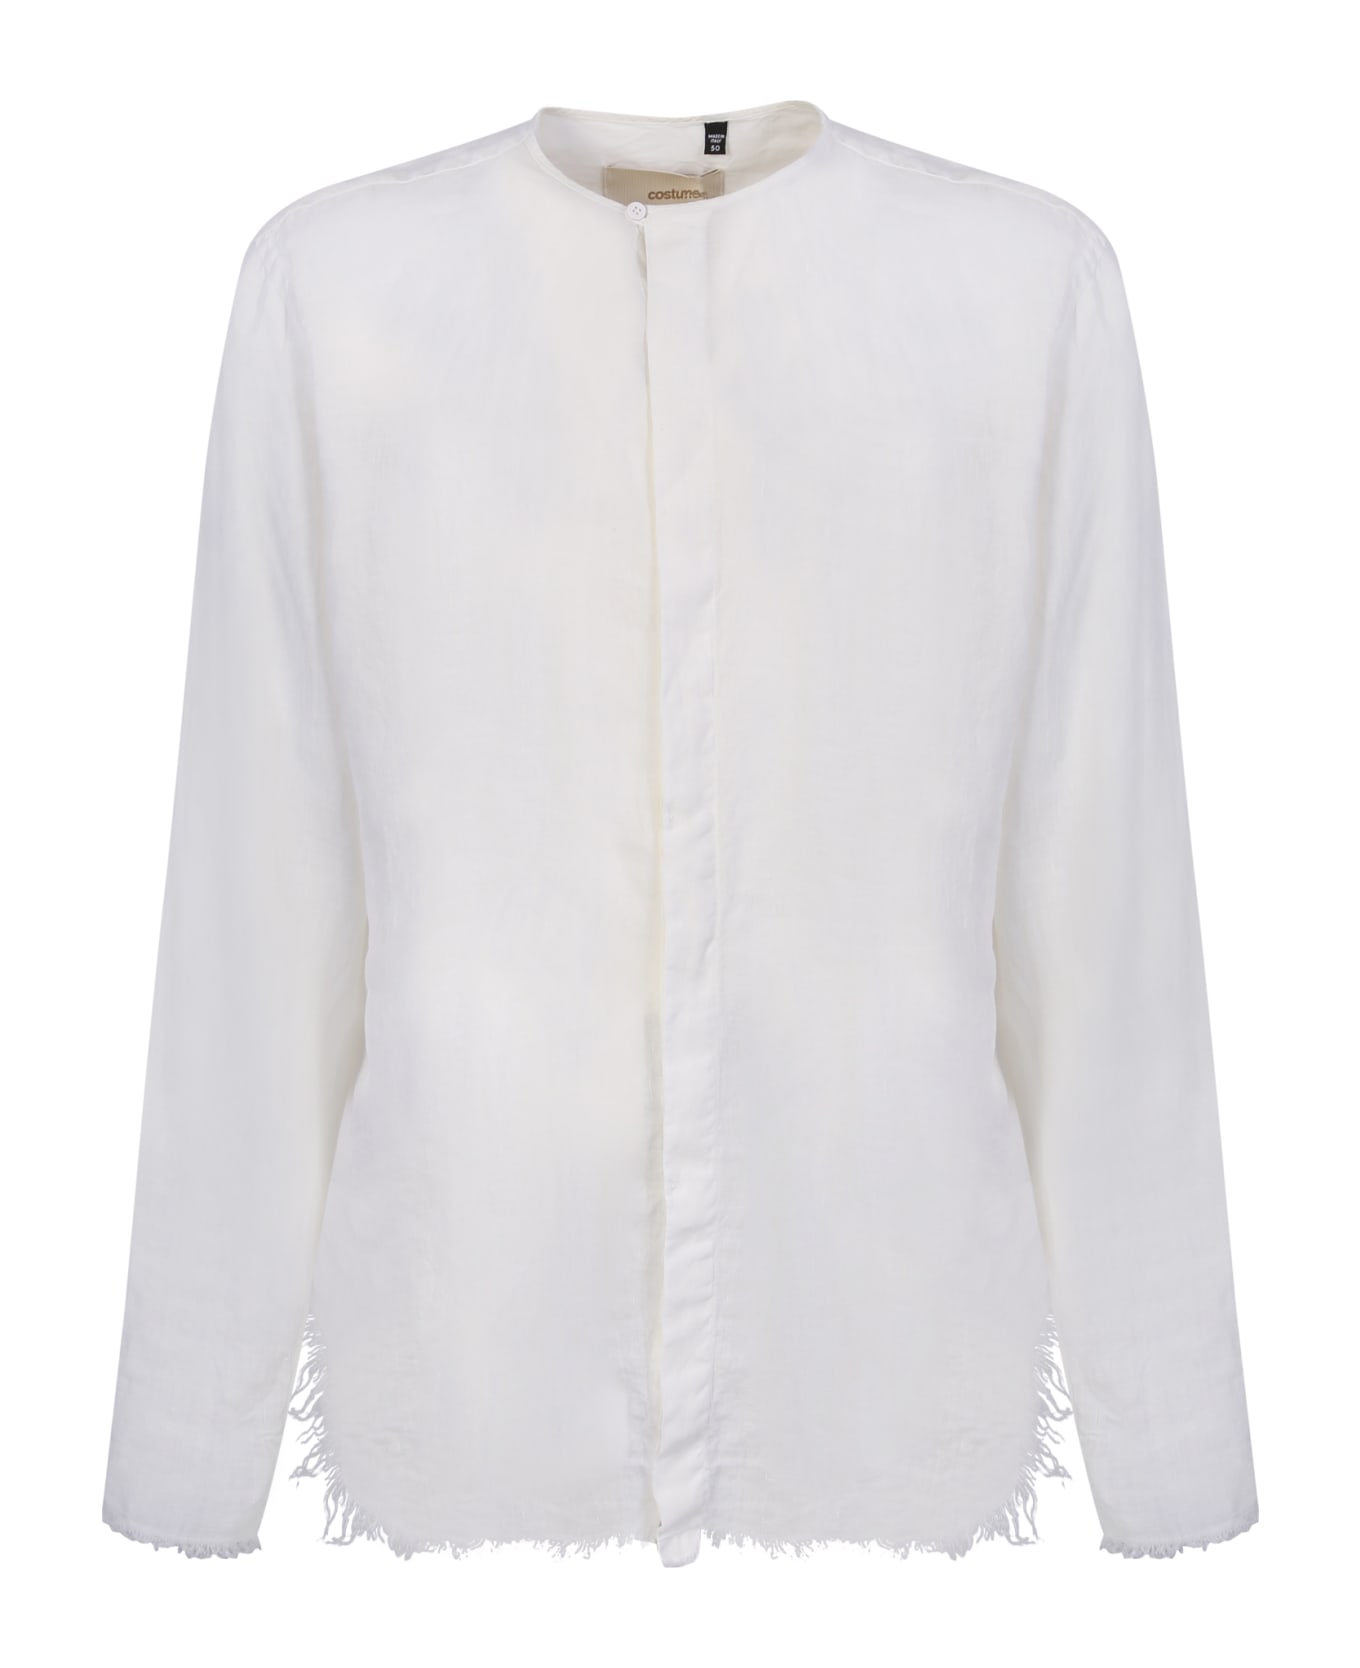 costumein Frayed Edges White Shirt - White